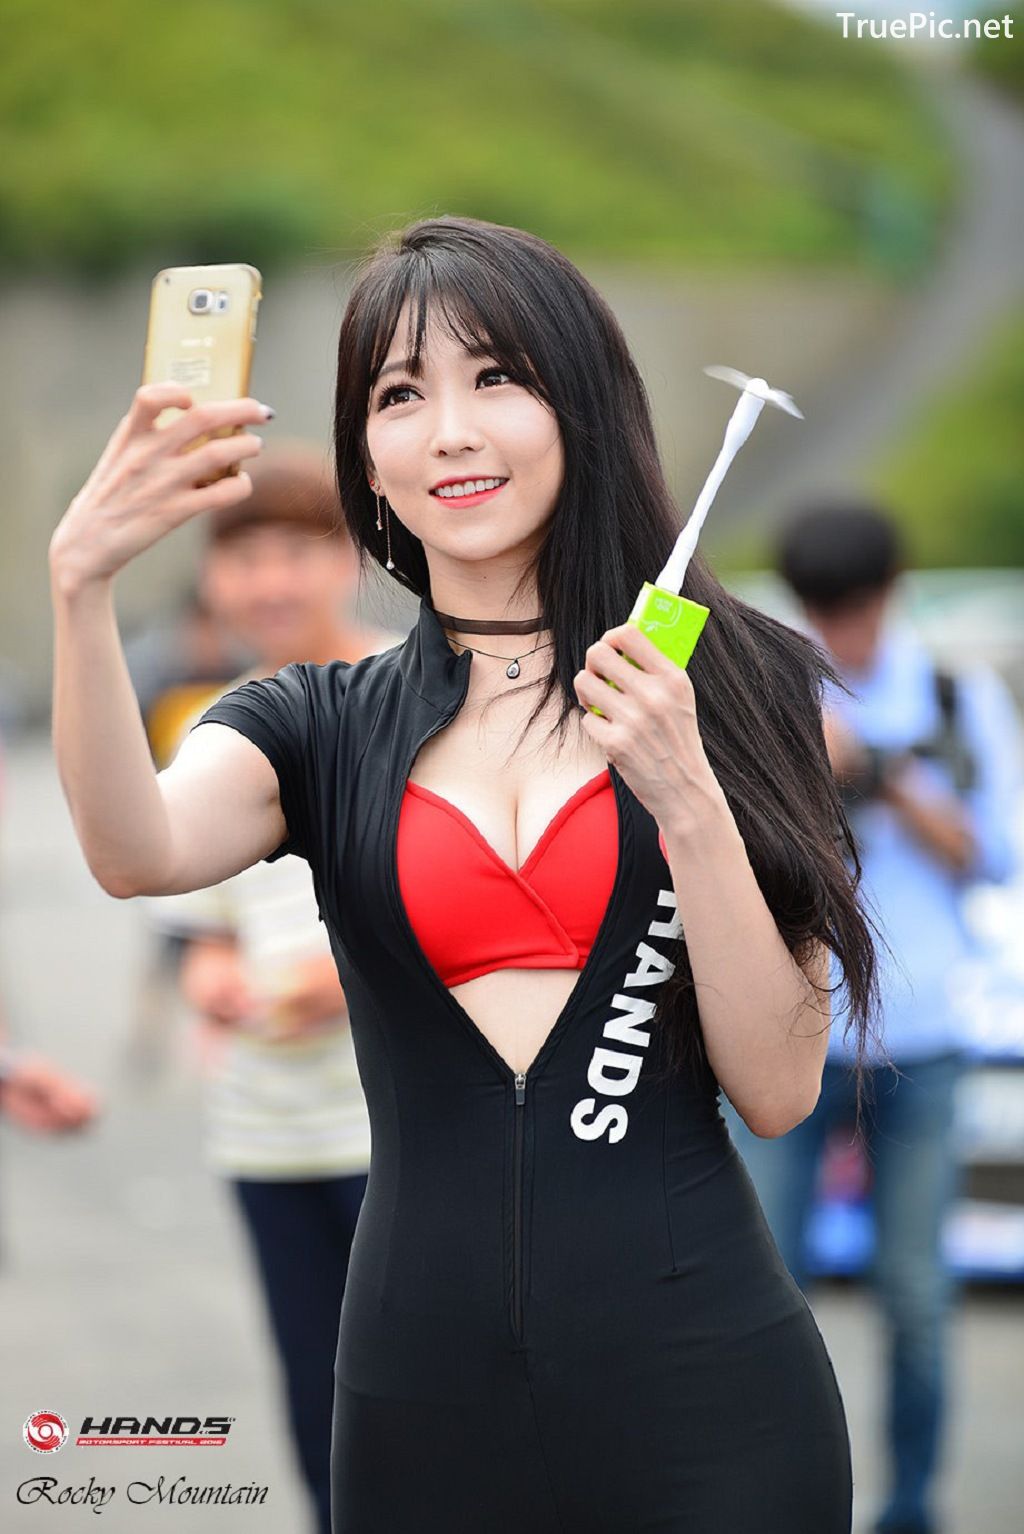 Image-Korean-Racing-Model-Lee-Eun-Hye-At-Incheon-Korea-Tuning-Festival-TruePic.net- Picture-237